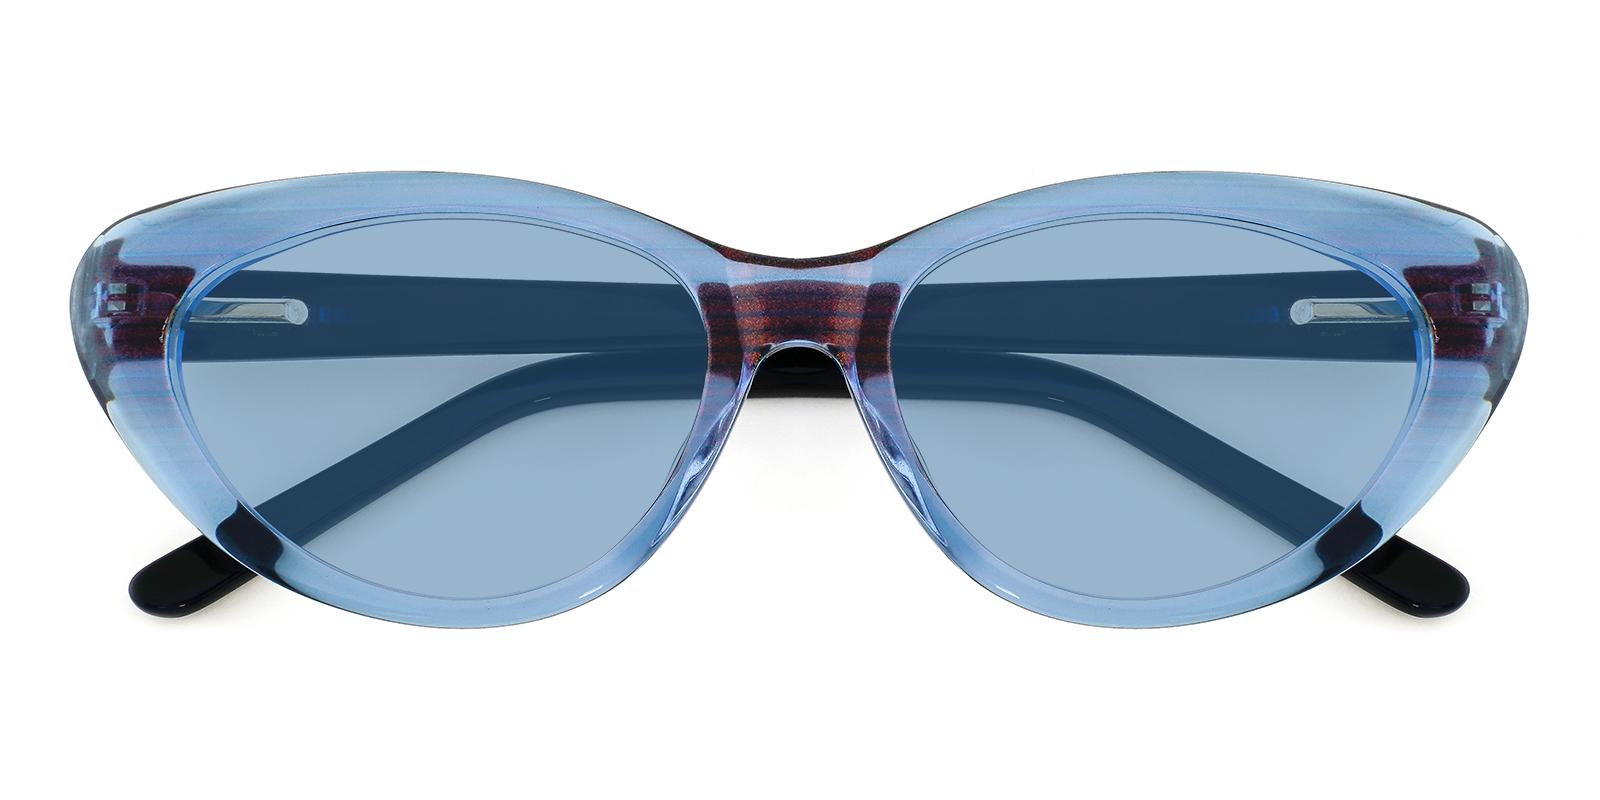 Botanist Blue Acetate SpringHinges , Sunglasses , UniversalBridgeFit Frames from ABBE Glasses